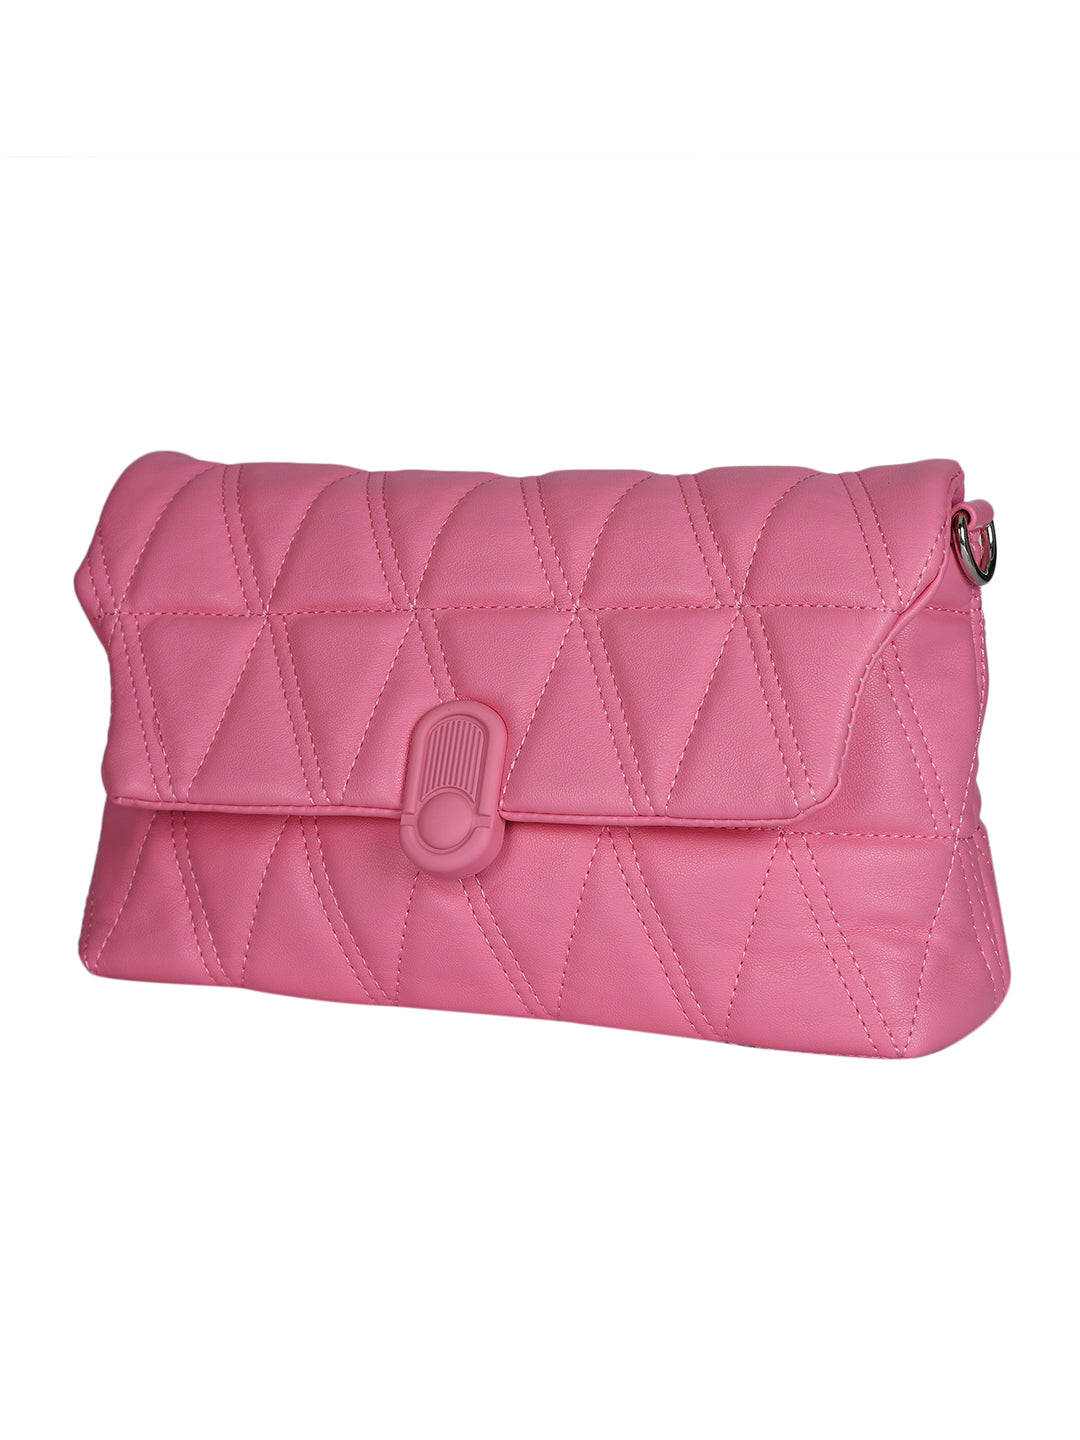 Women's Pink Handheld Bag